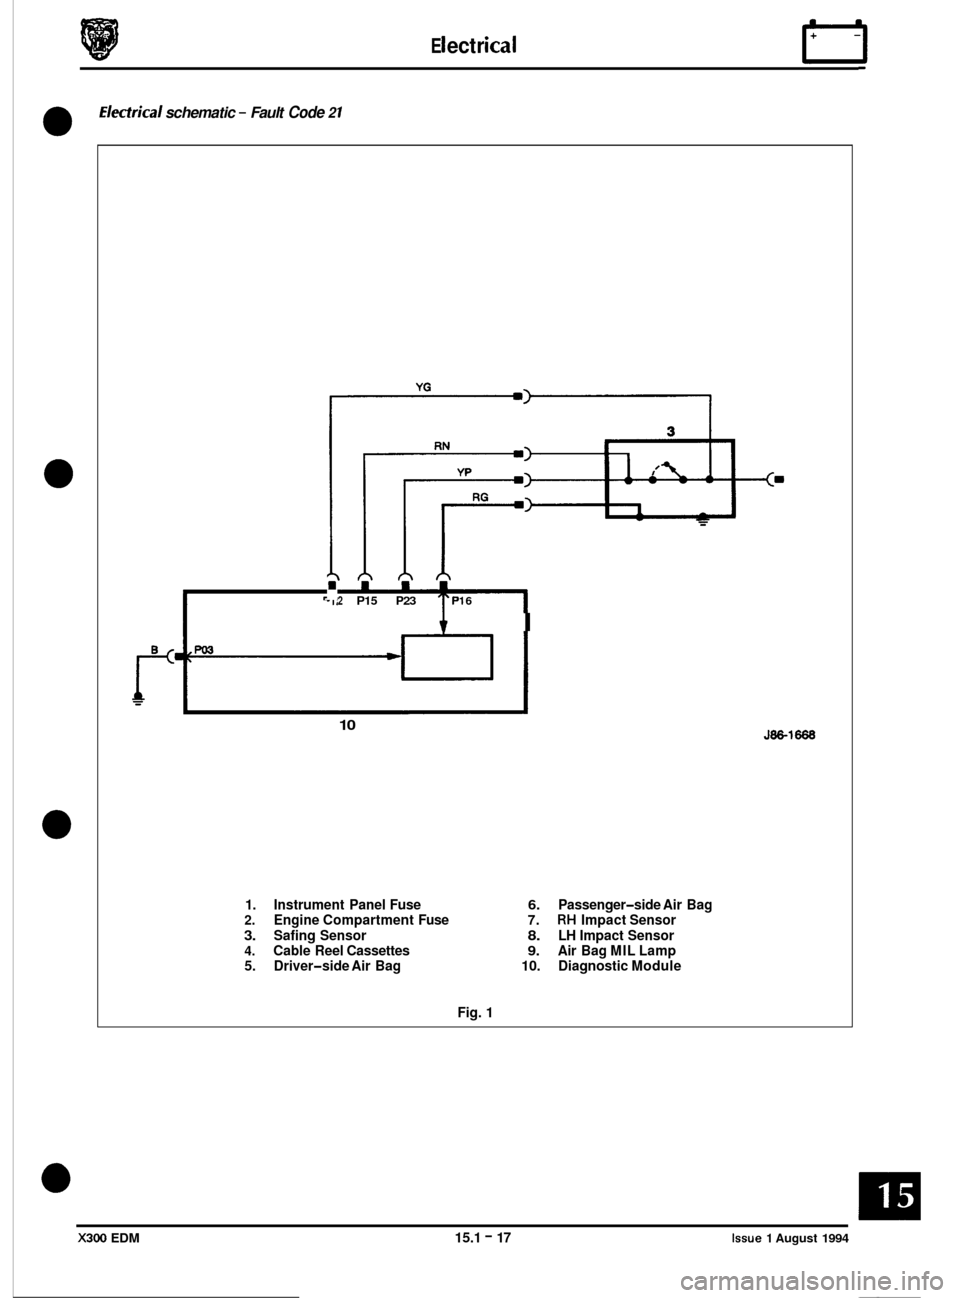 JAGUAR XJ6 1994 2.G Electrical Diagnostic Manual E I ect r ica I rl 
Electrkal schematic - Fault Code 2 1 
0 
0 
0 
0 
2 P15 P23 PI 6 
i I 
10 
1. Instrument  Panel  Fuse 6. Passenger-side Air  Bag 2. Engine  Compartment  Fuse 7. RH Impact Sensor 
3